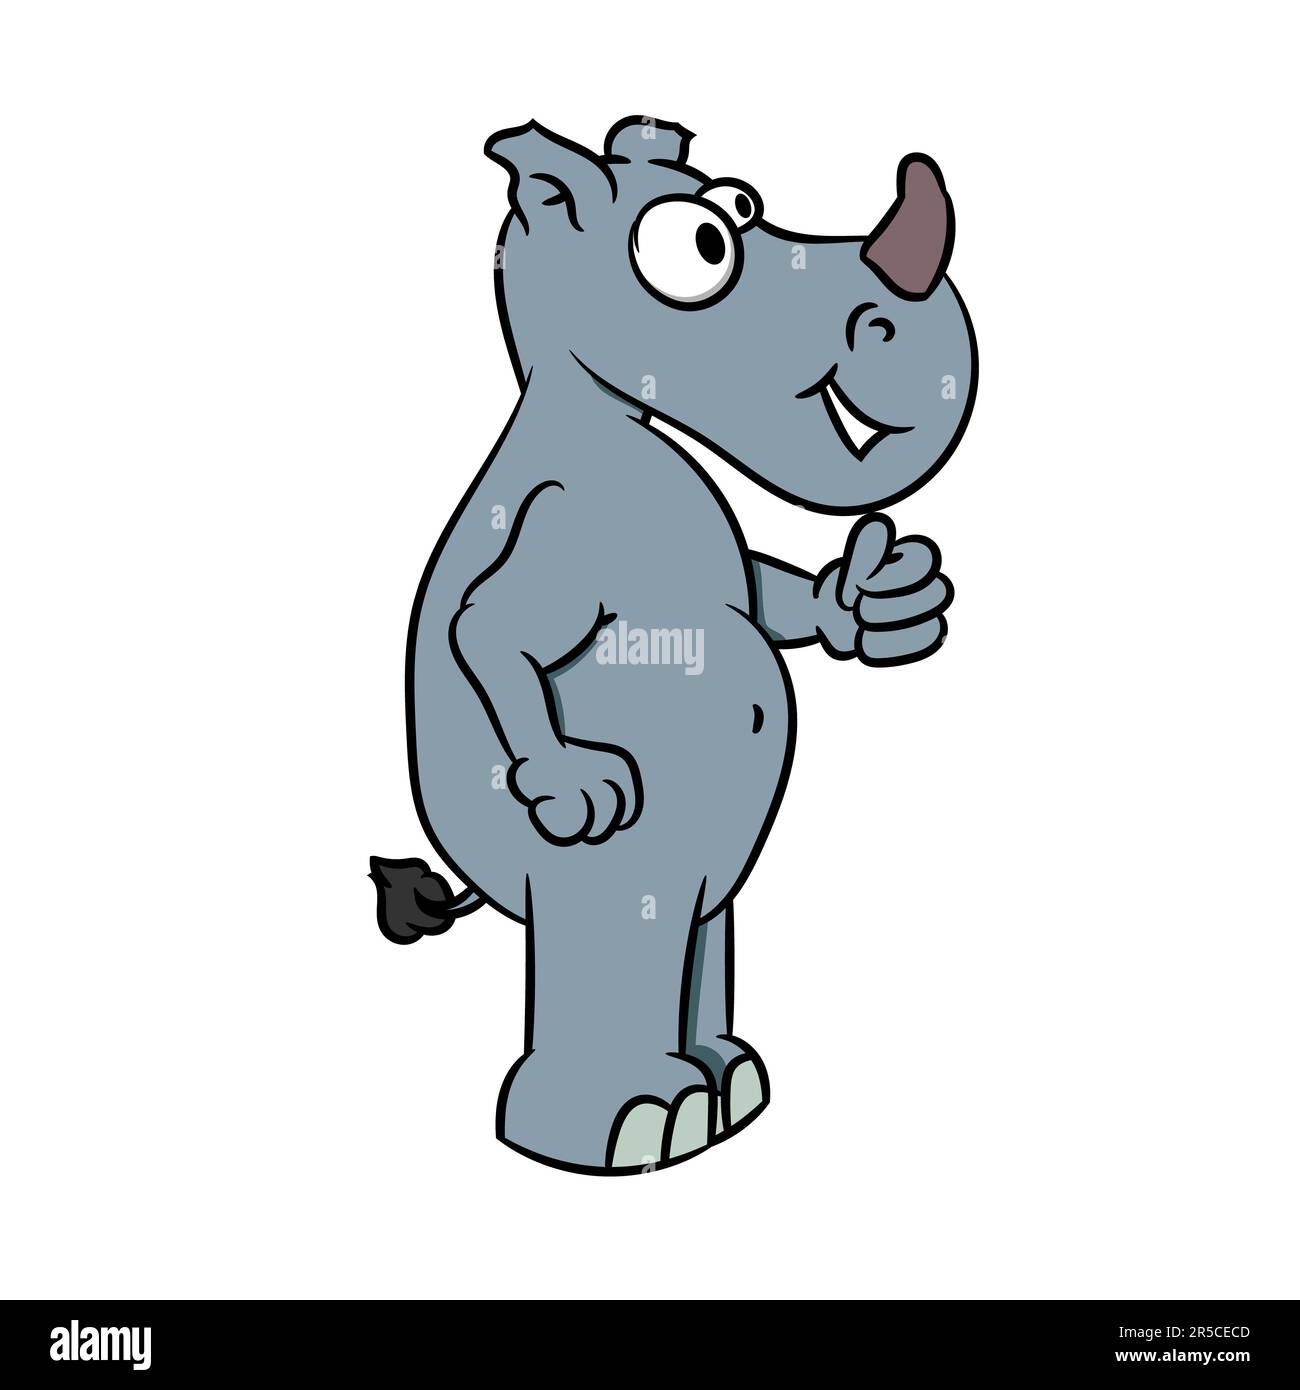 Cartoon rhino with thumb up, cute animals comic style, vector illustration Stock Photo